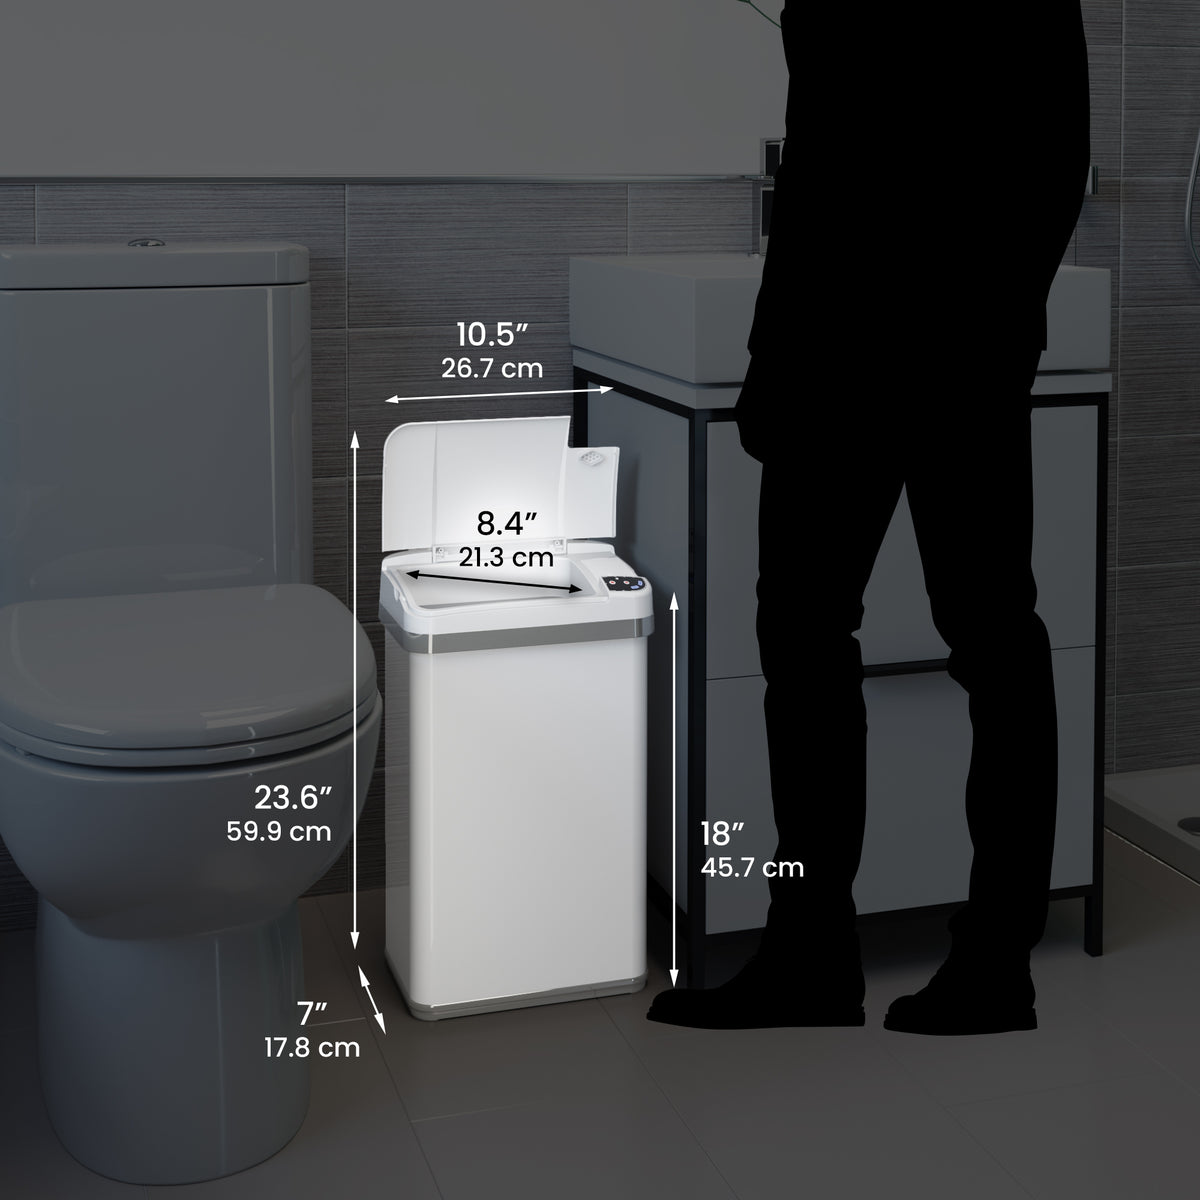 4 Gallon / 15 Liter White Sensor Bathroom Trash Can dimensions